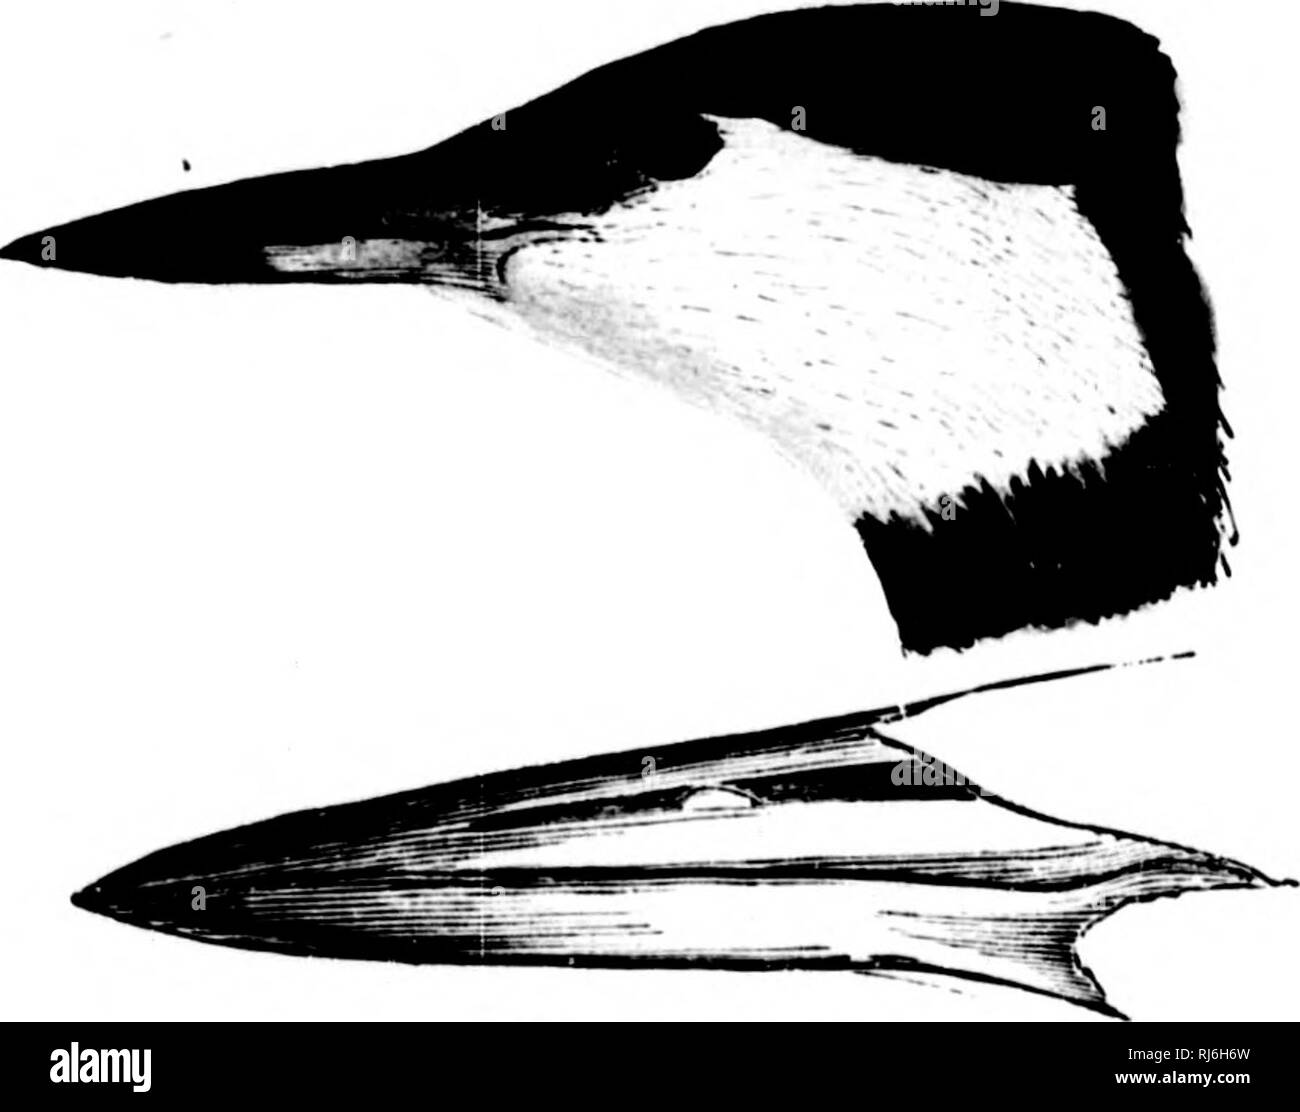 . The water birds of North America [microform]. Birds; Water-birds; Oiseaux; Oiseaux aquatiques. i 428 THE DIVING BIRDS - PYGOI'ODES. Colymbus Holbcellii. THE AMERICAN RED-NECKED OREBE. Podiceps rubricnlUs, &quot;Lath.'&quot; Udxap. Synoi). 1828, 41&quot;. — Sw. k Kicii. F. R. A. II. 1831, 411.— Xi-TT. Man. II. 1S:U, '2.'.3. — Arn. Oni. Biog. HI. 1835, 017, pi. 2!t8 ; Syiiop. 183,'), 357 ; B. Am. VII. 1844, 312, j.I. 4S0. Podiceps rnbricollis major, Tkmm. &amp; Sciii.F.o. Kauii. Jap. 1849, pi. 78, B (not Colymbus major, BoDD. 1783). Podiceps grmkjena, &quot; BoDD.&quot; Lawk, in BairJ's B. N.  Stock Photo